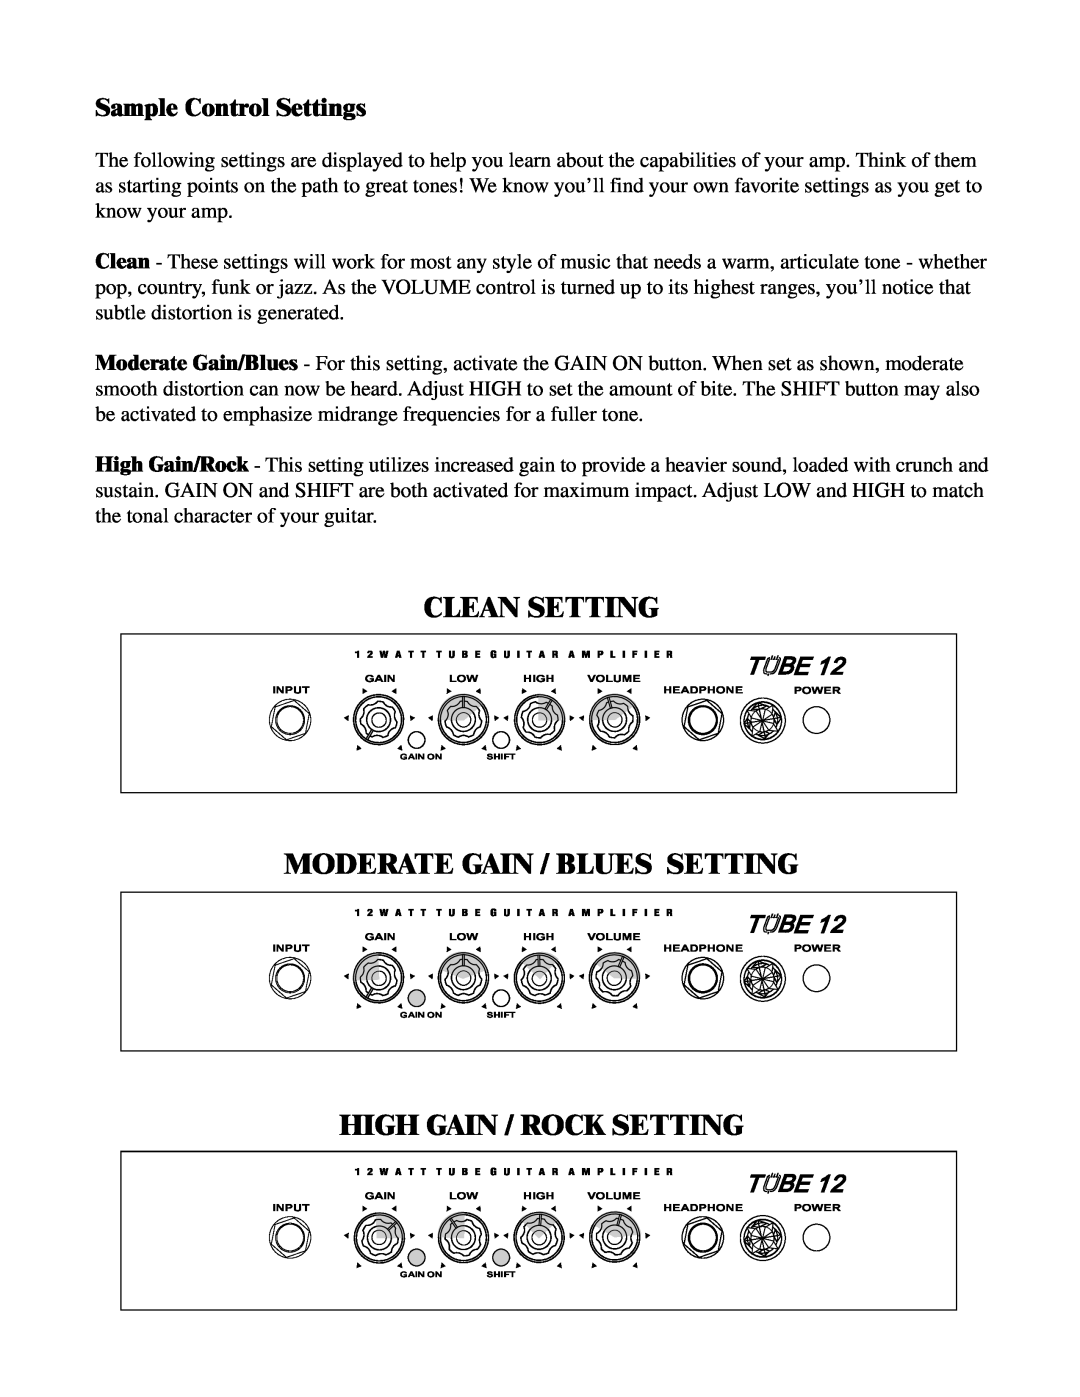 Kustom Tube12A manual Clean Setting, Moderate Gain / Blues Setting, High Gain / Rock Setting, Sample Control Settings 